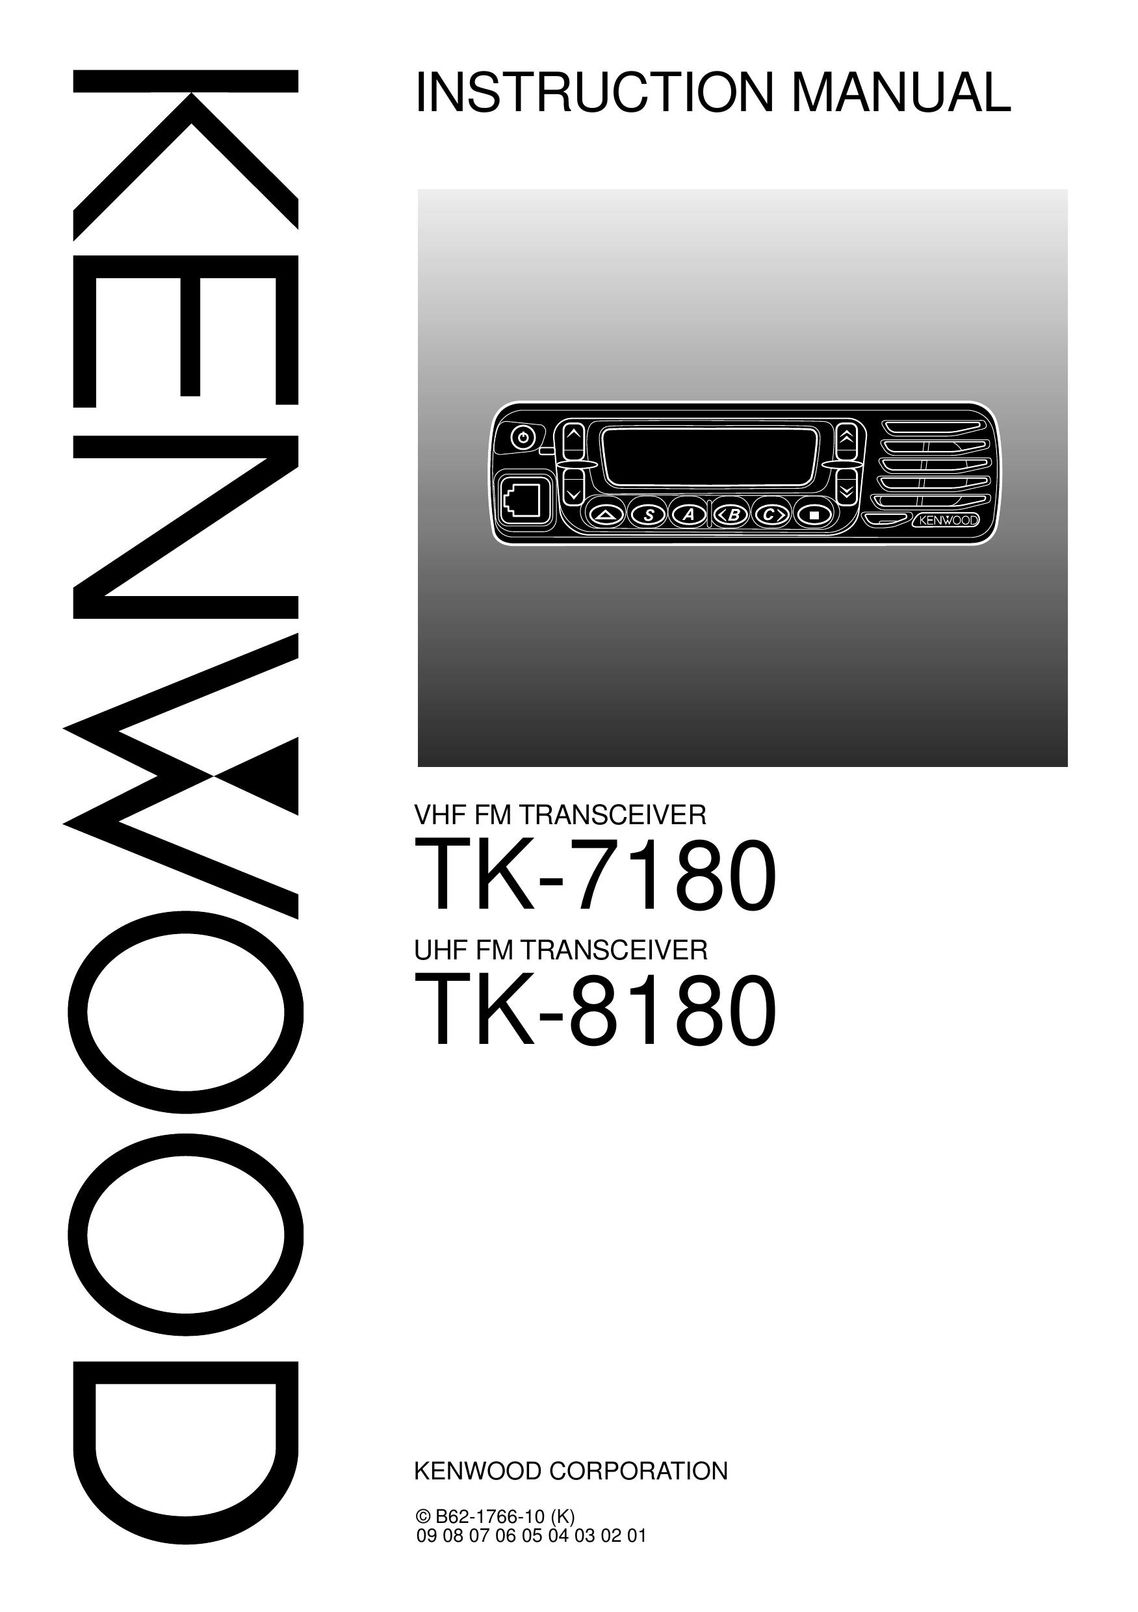 Kenwood TK-7180 Home Security System User Manual